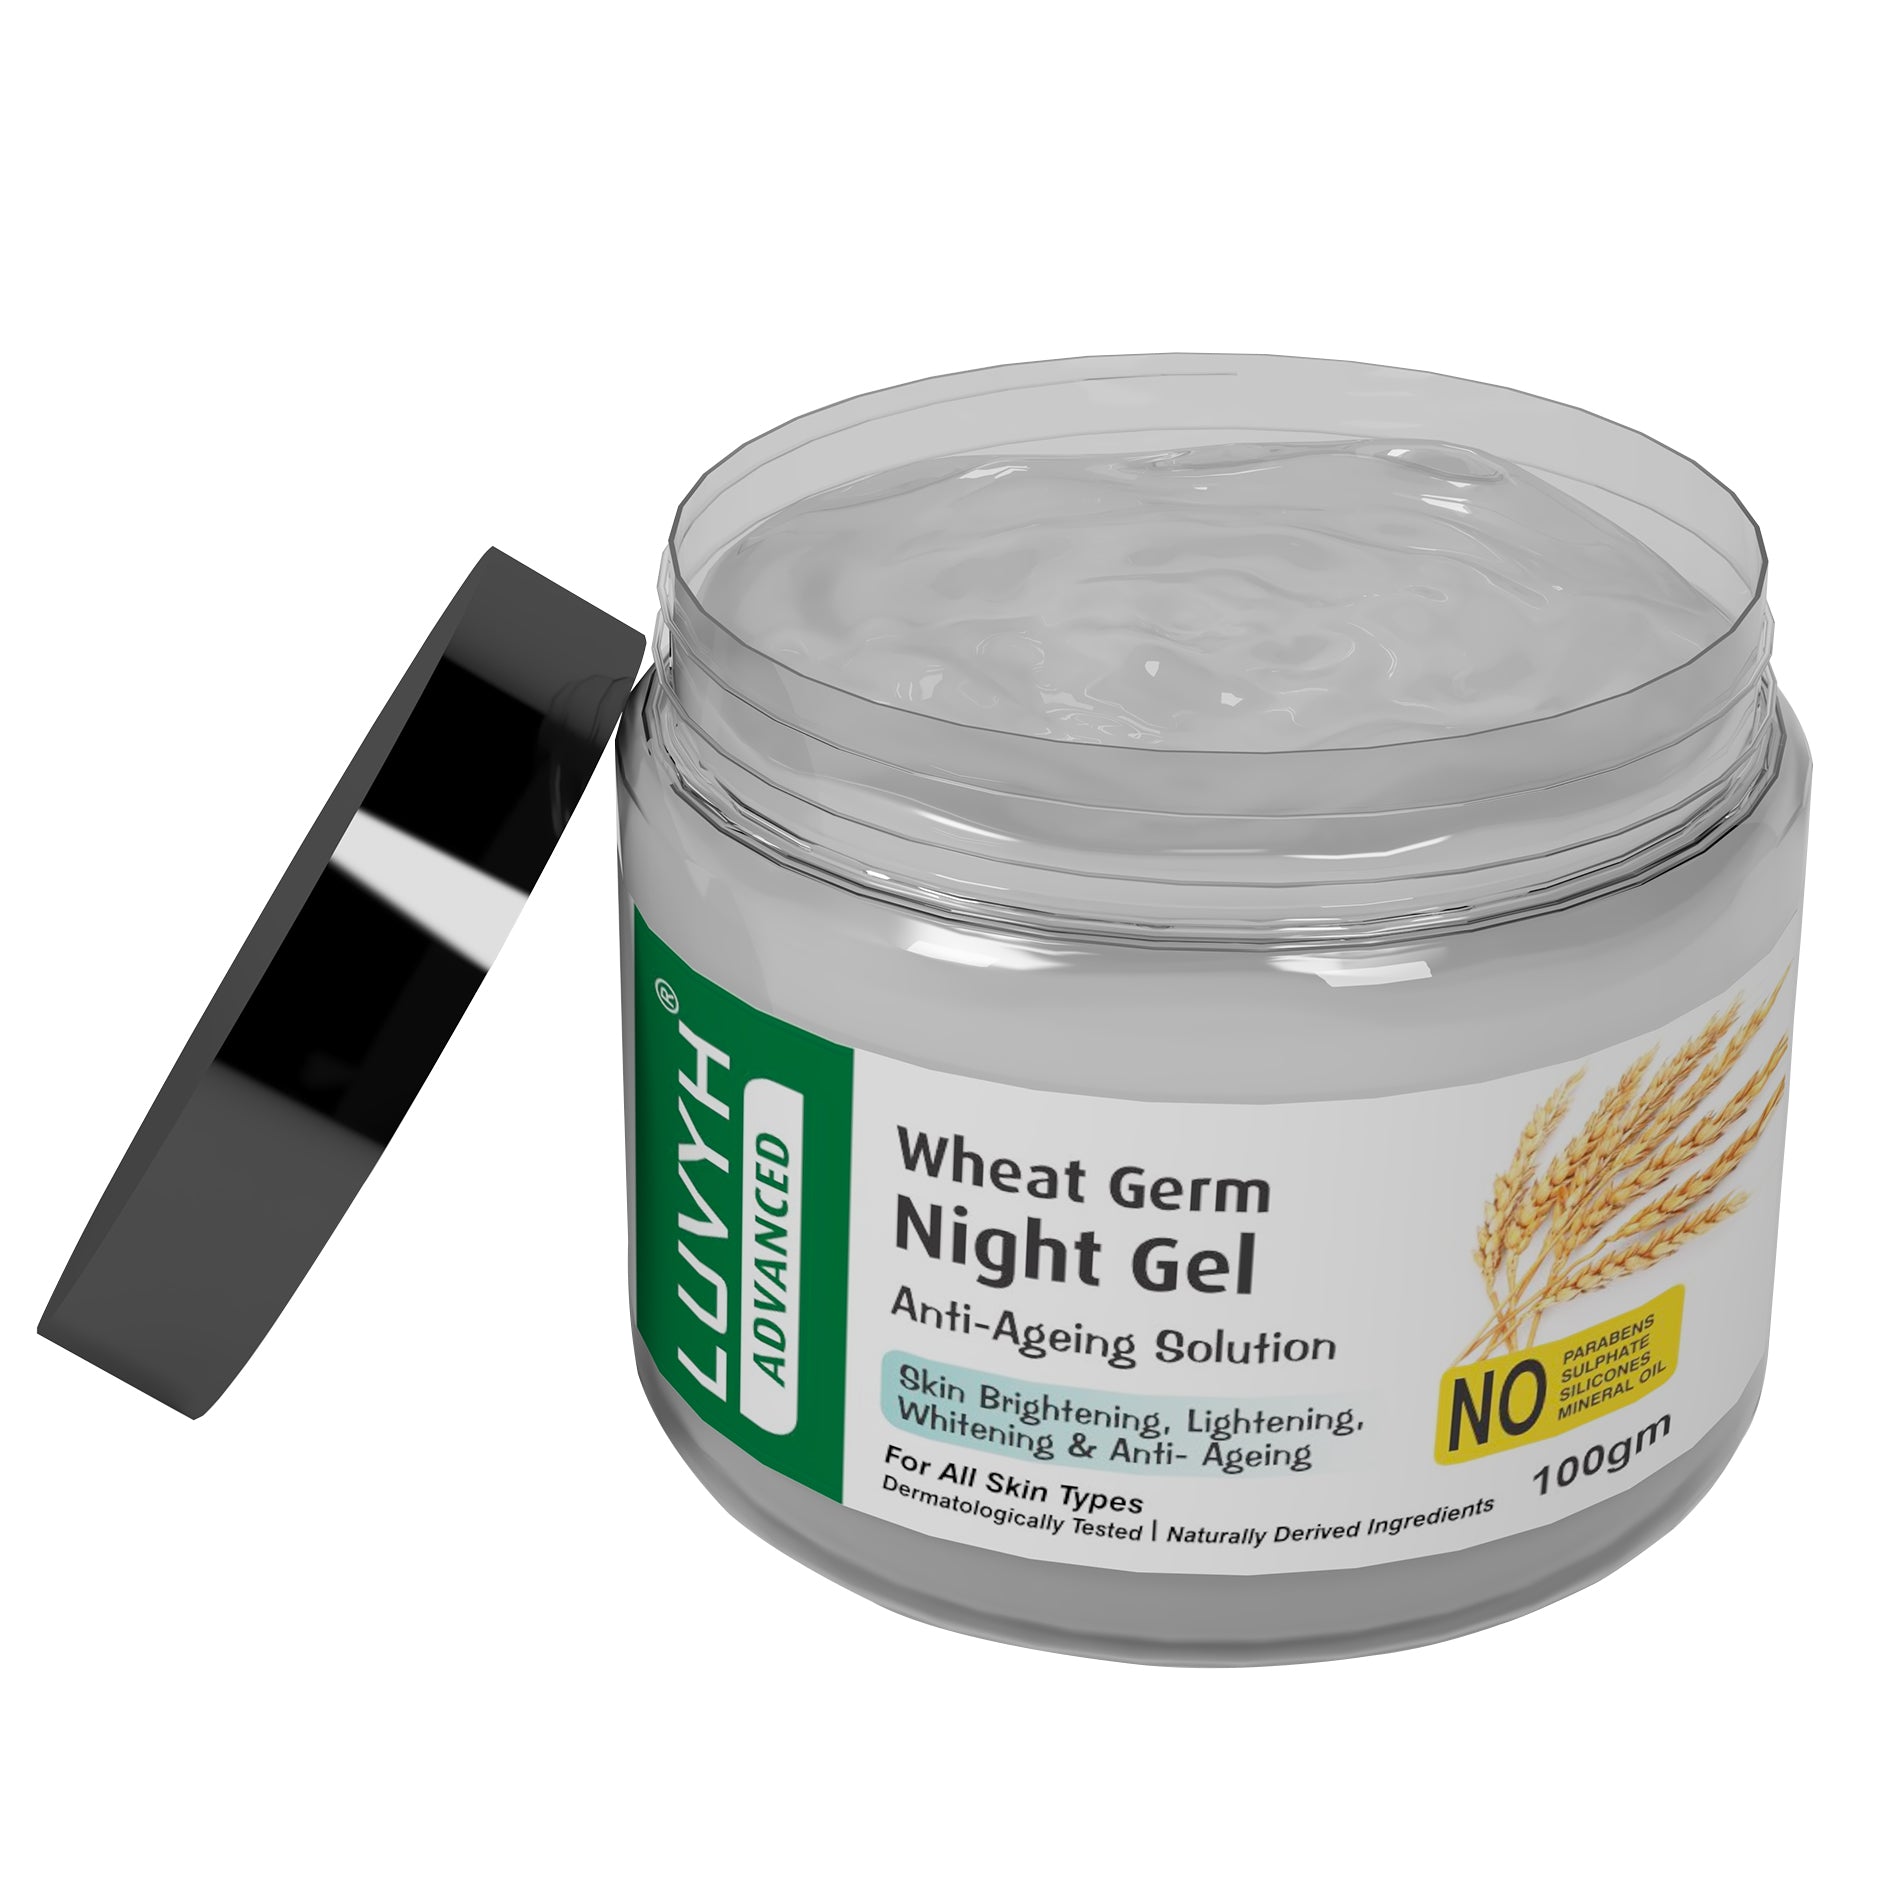 Wheat Germ Night Gel for Anti-Ageing